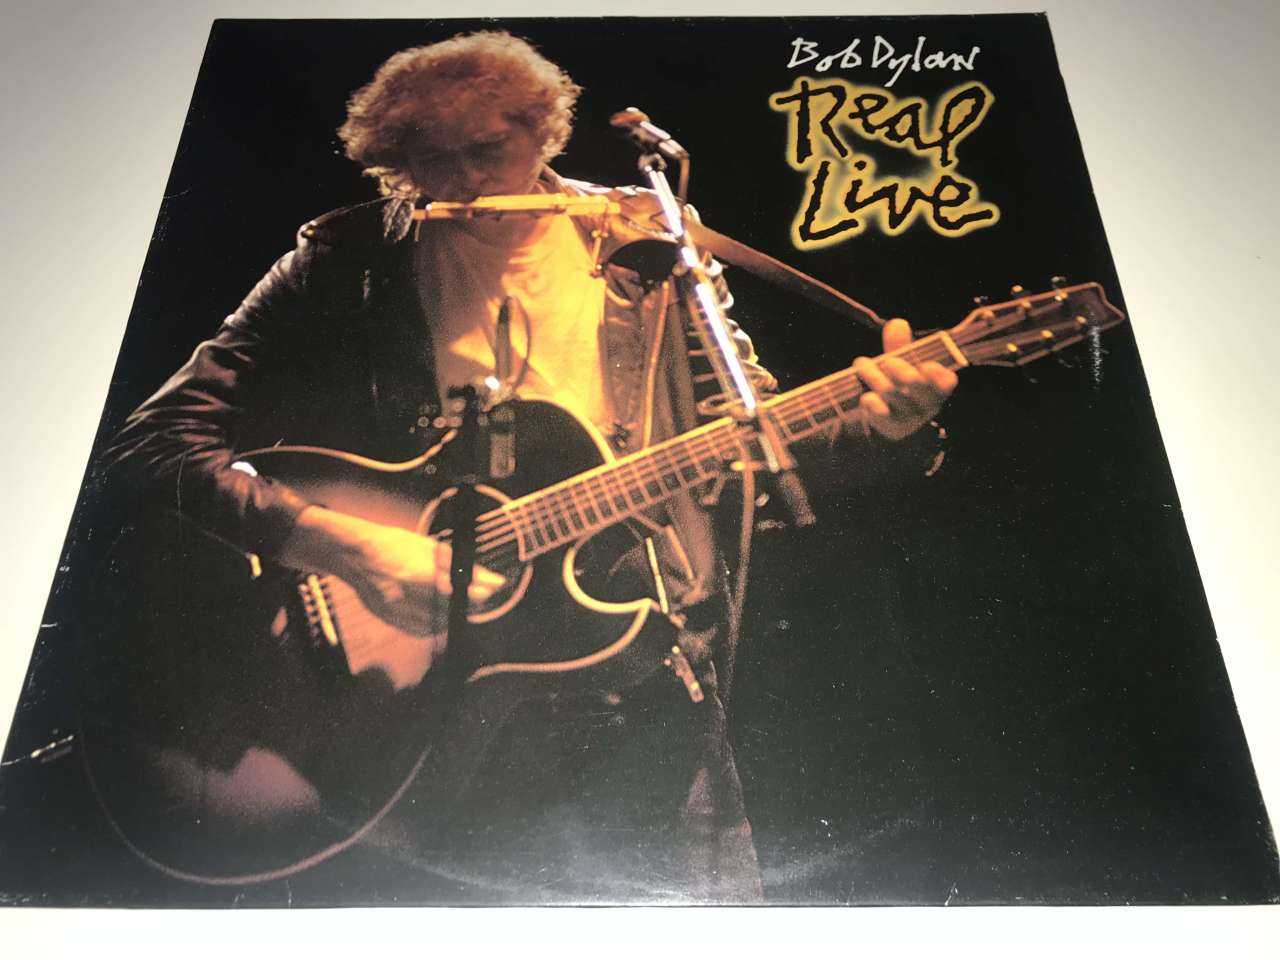 Bob Dylan ‎– Real Live